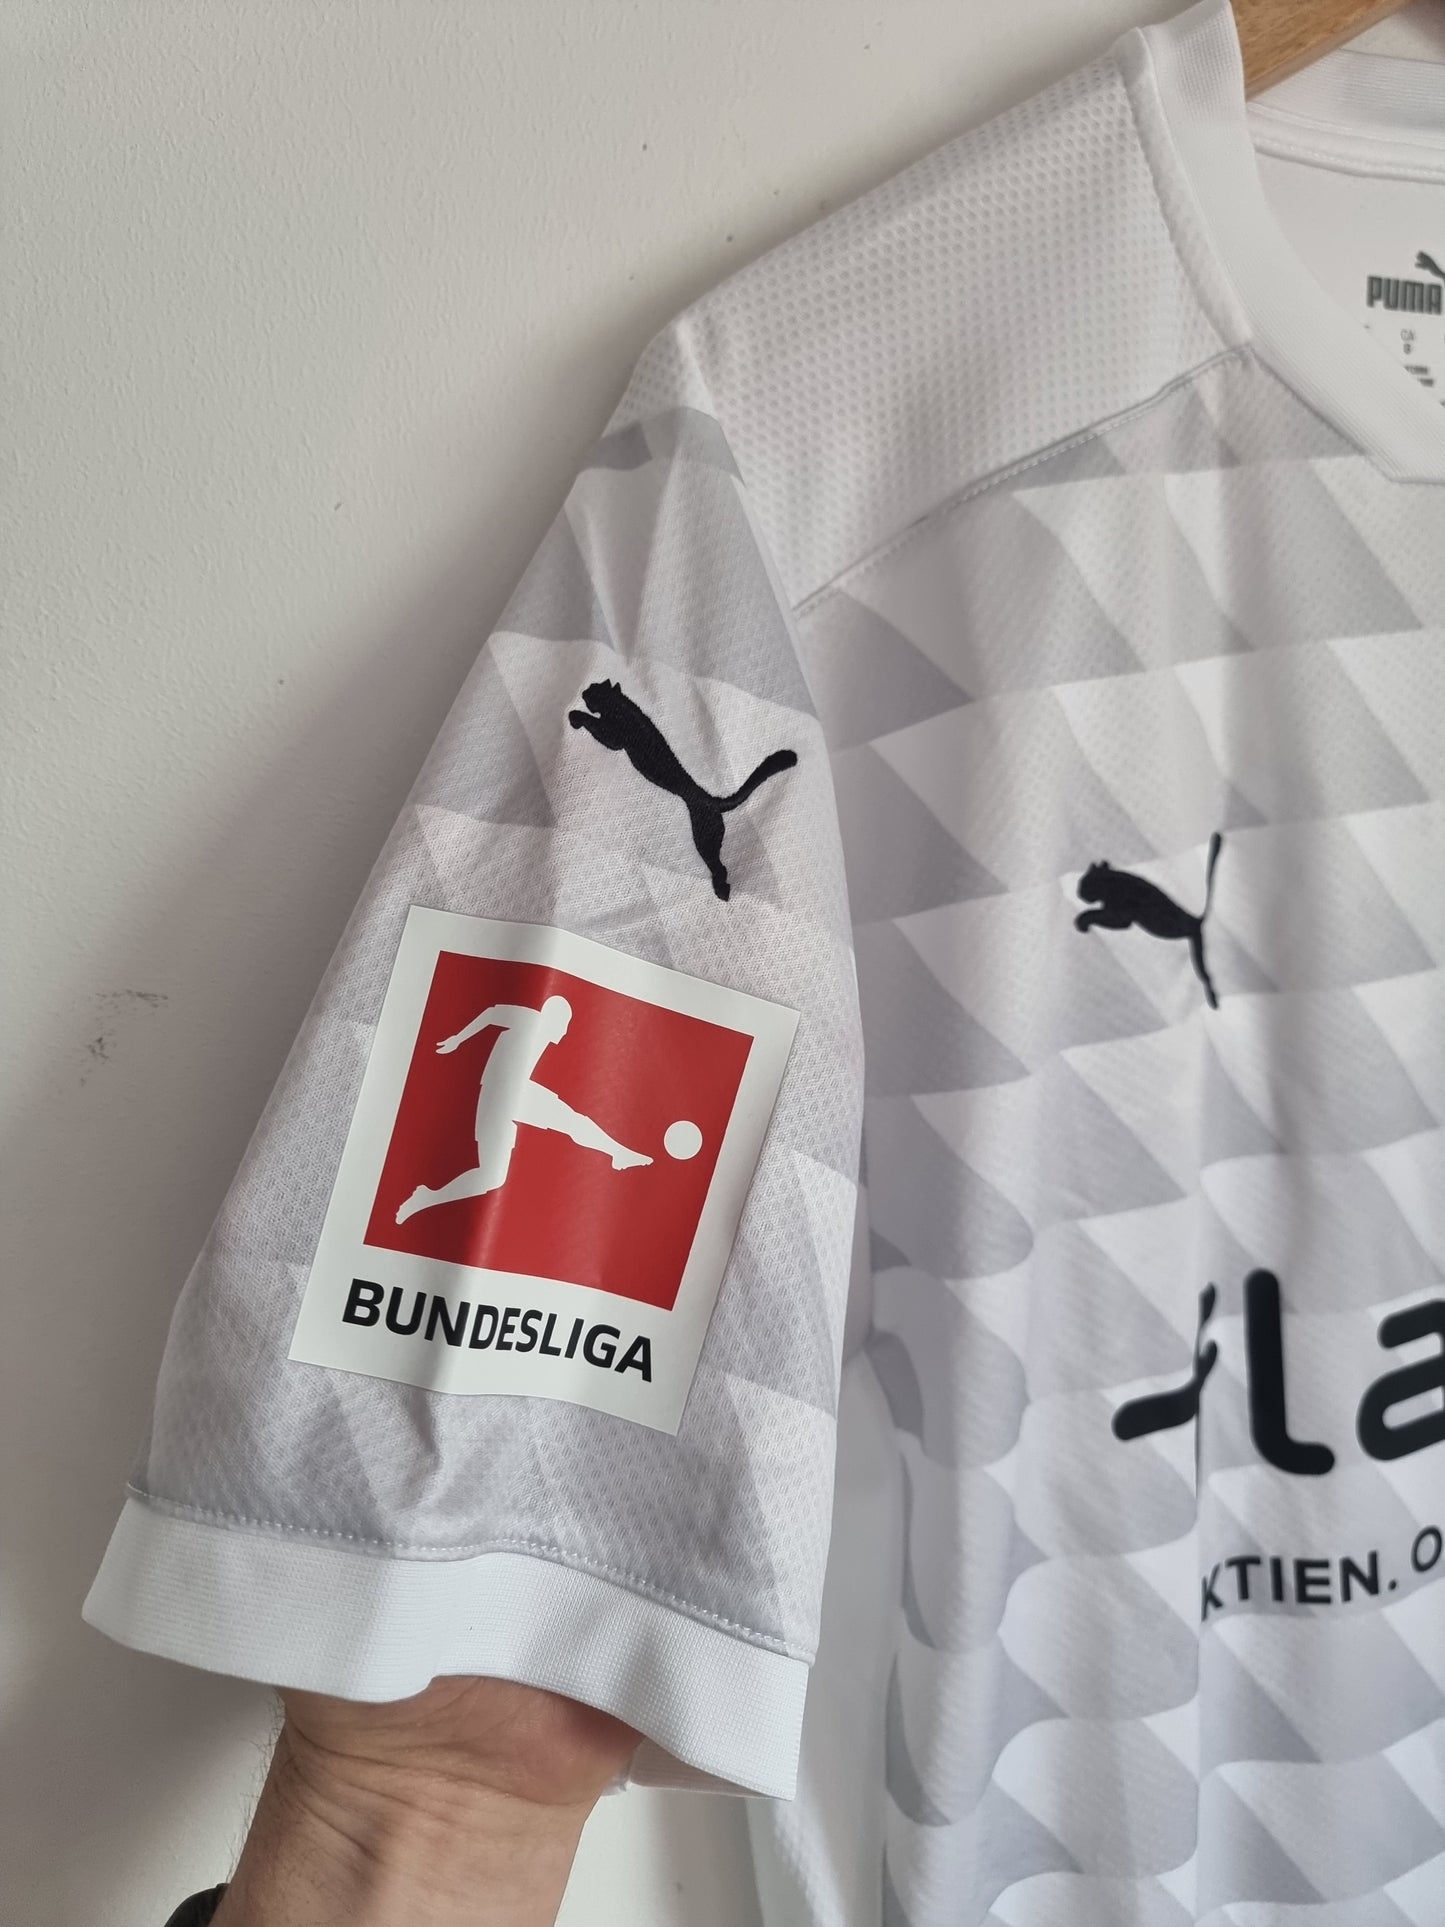 Puma Borussia Monchengladbach 20/21 'Lainer 18' Home Shirt Large